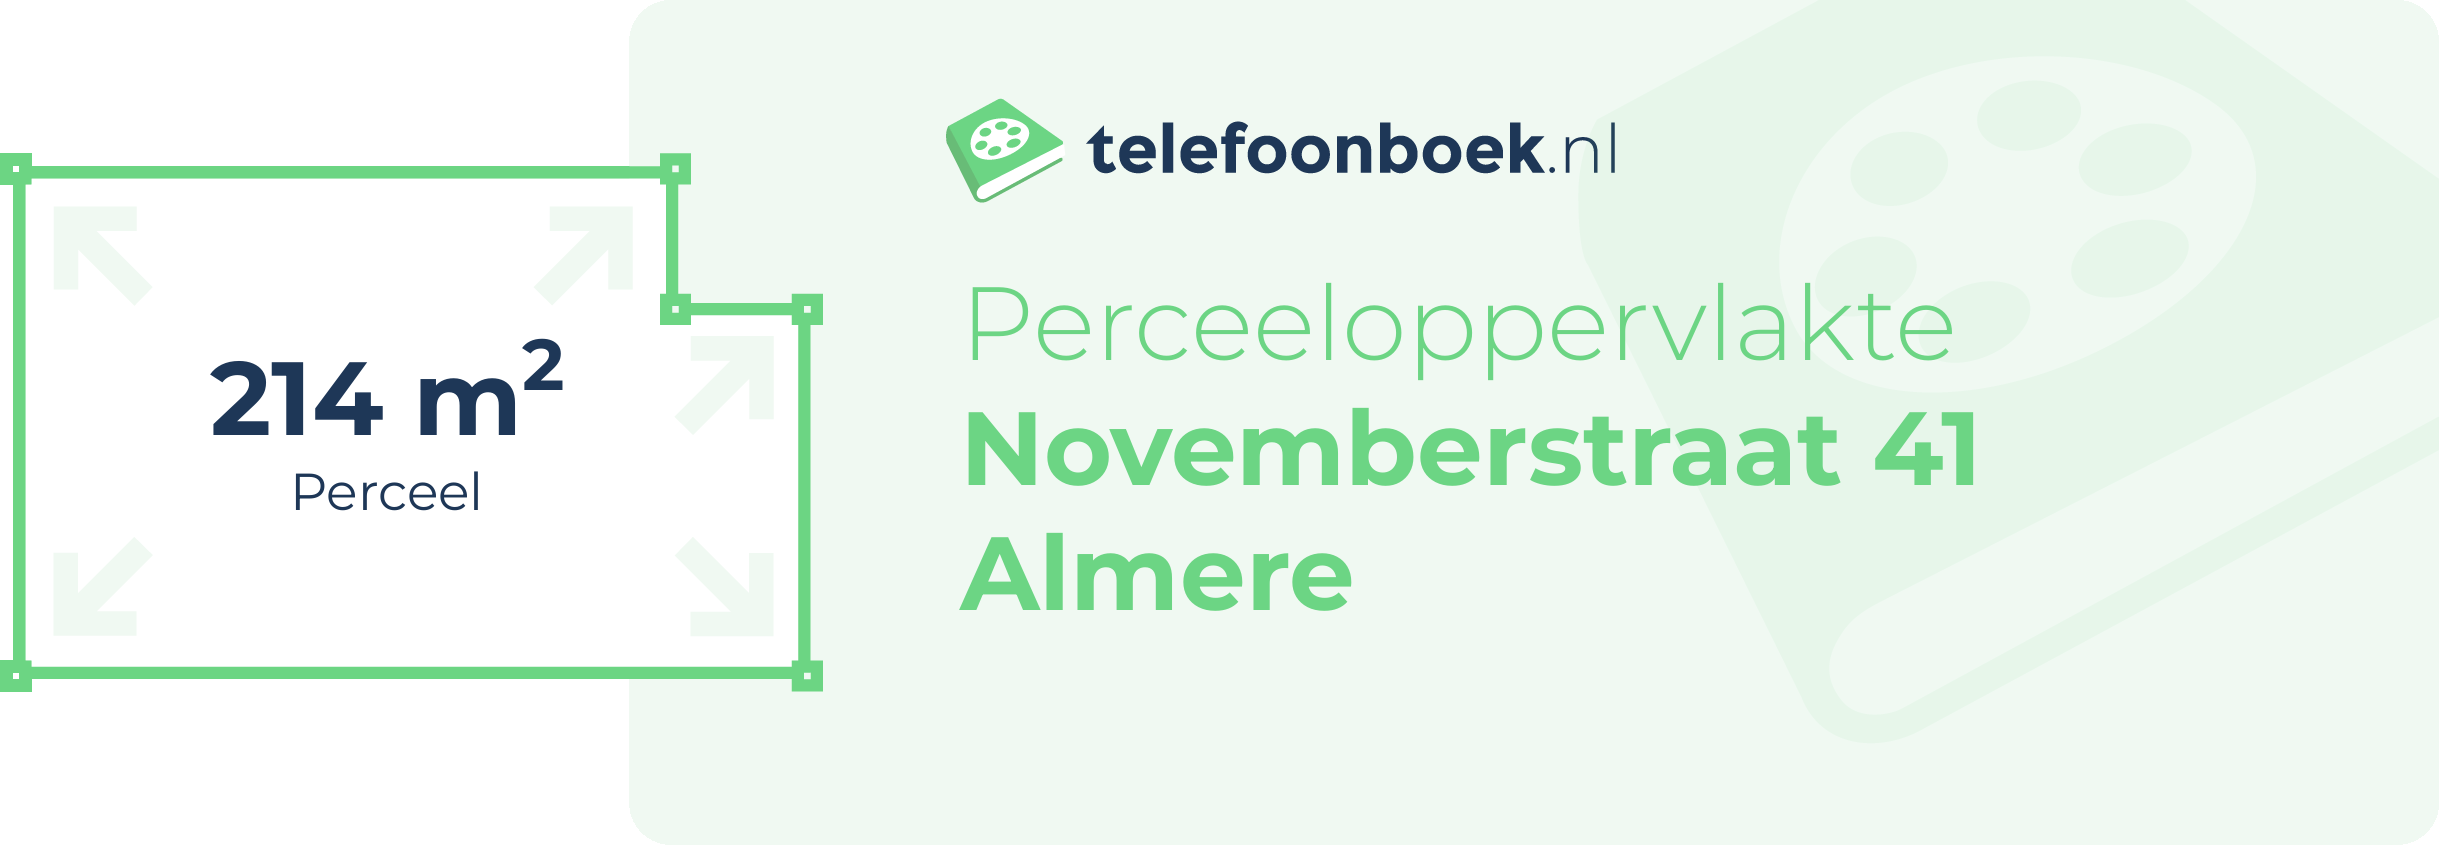 Perceeloppervlakte Novemberstraat 41 Almere